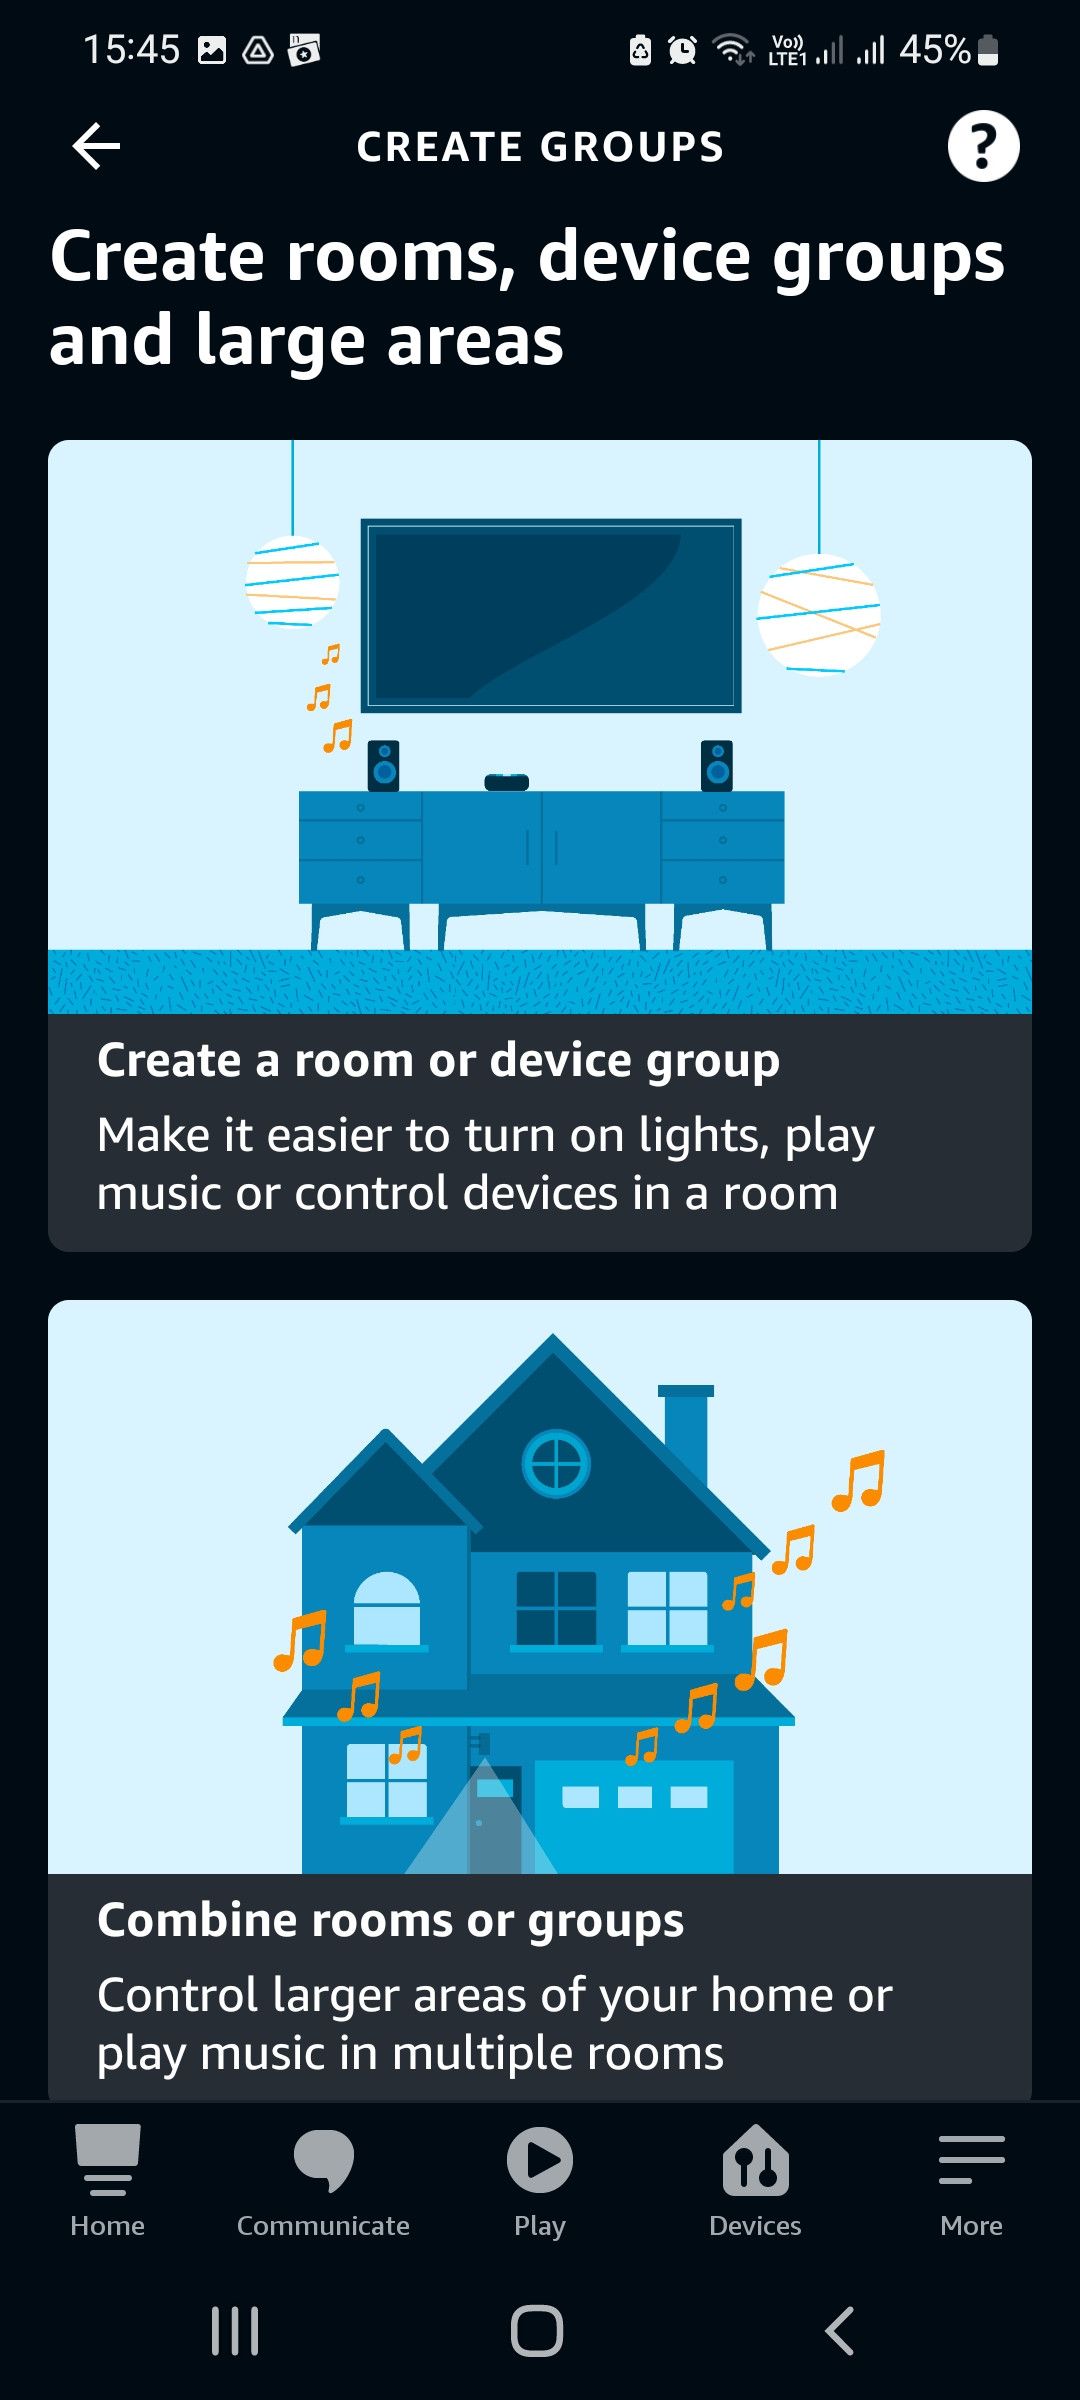 The create groups screen in Alexa app